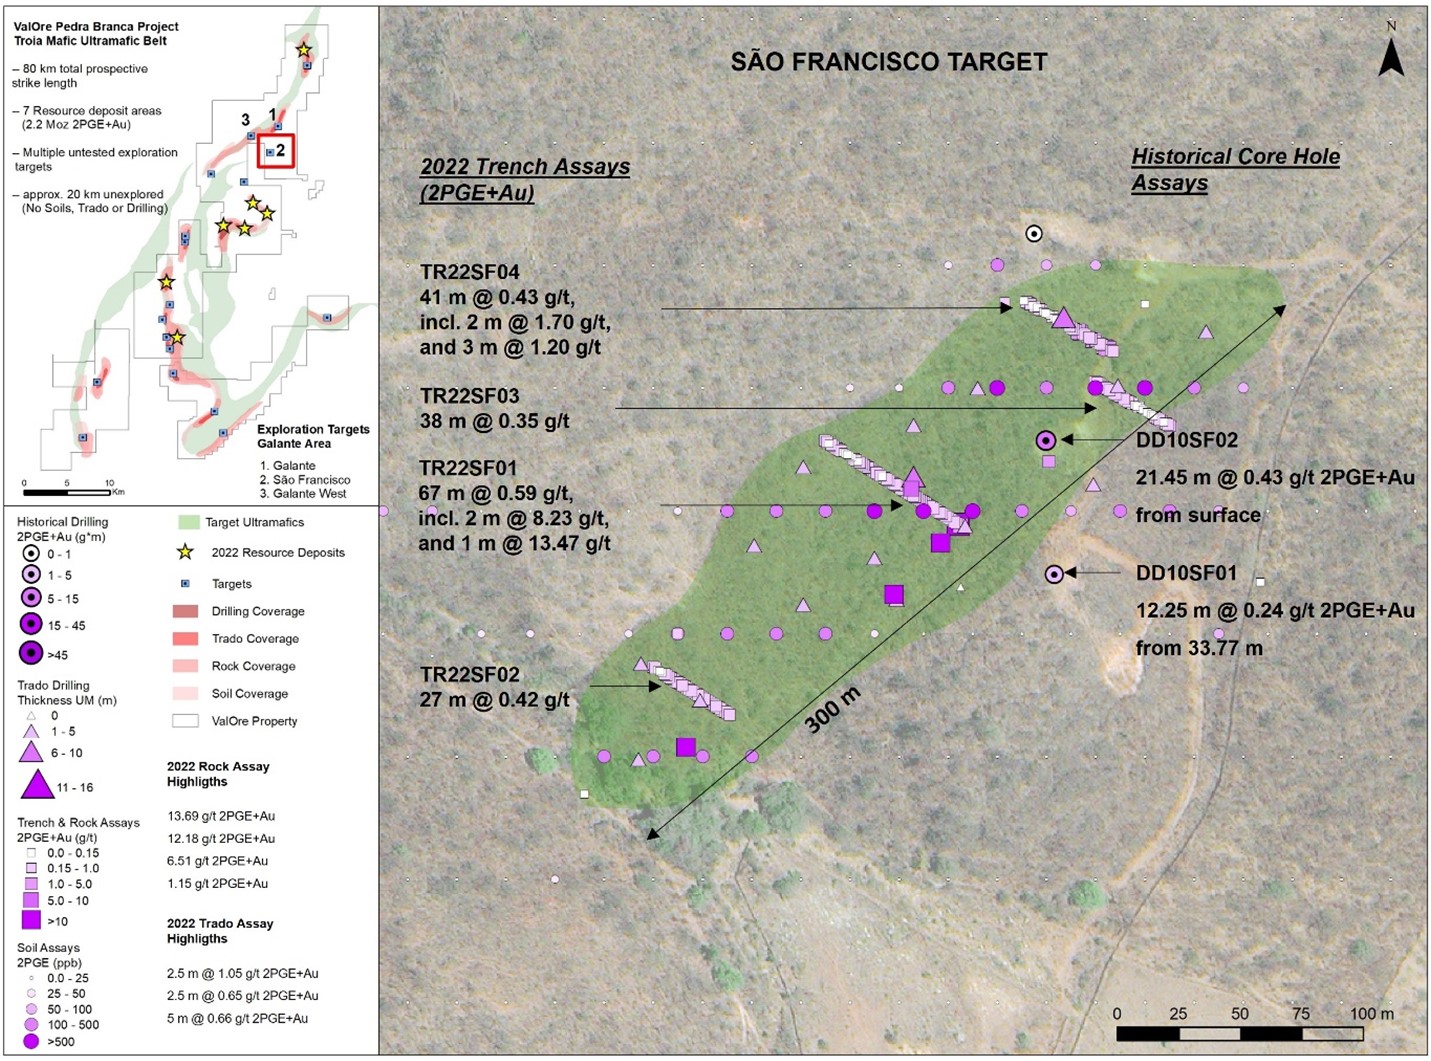 Figure 3: Plan map of the São Francisco target